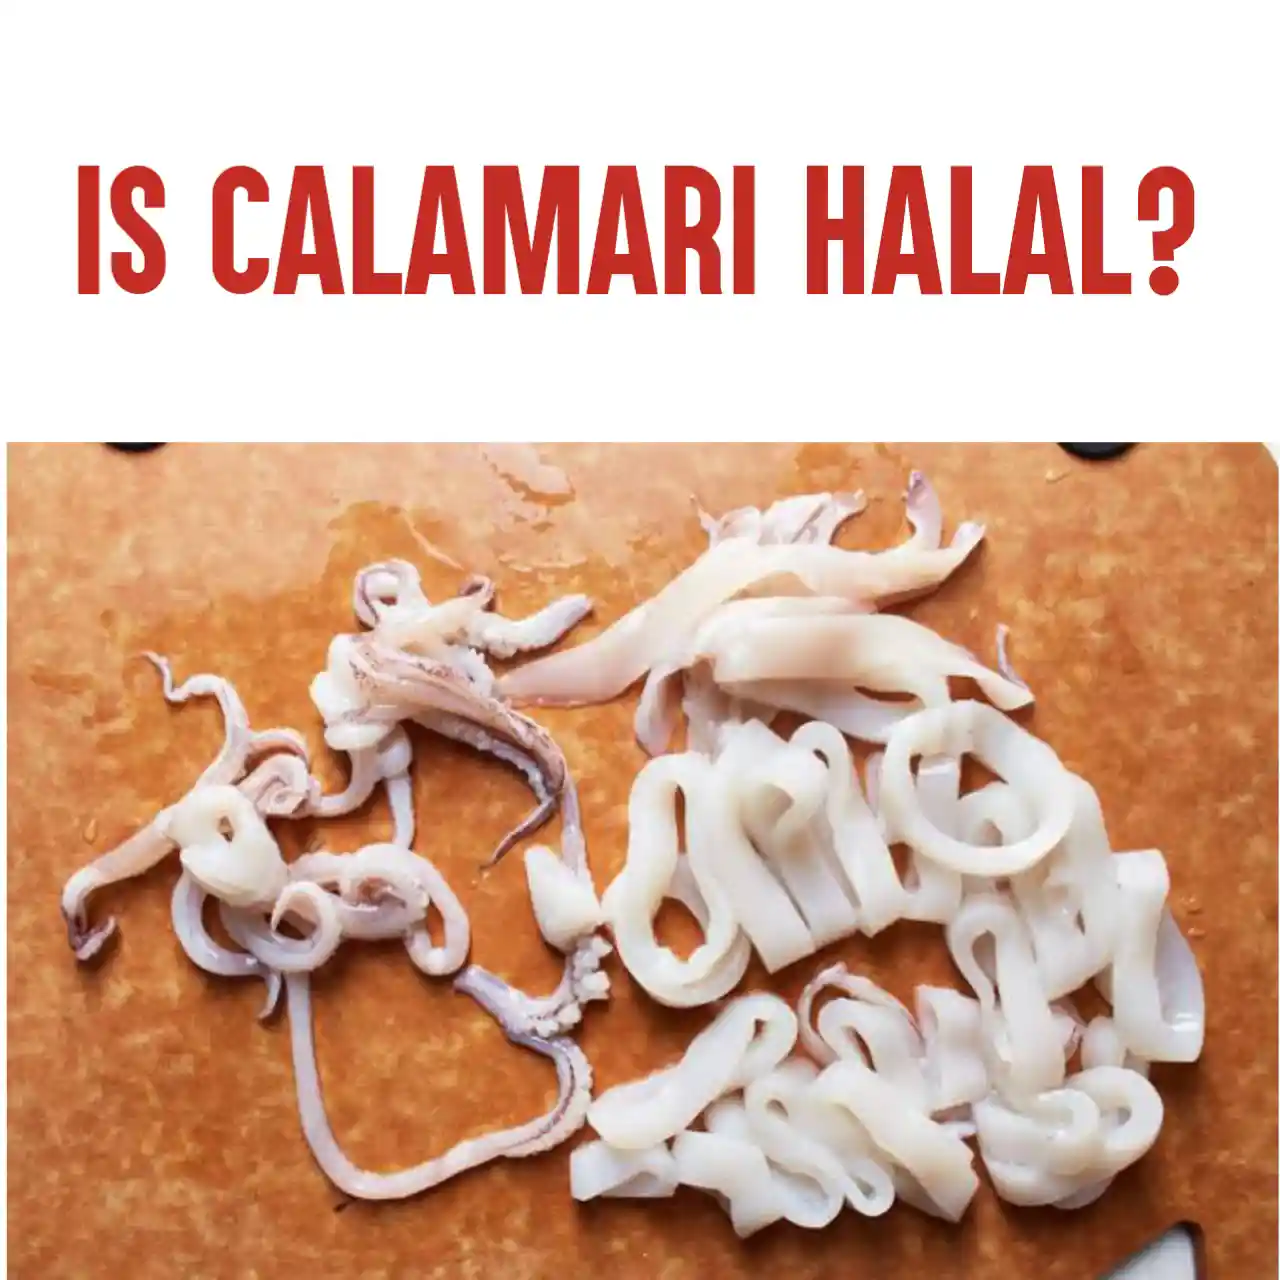 Is Calamari Halal